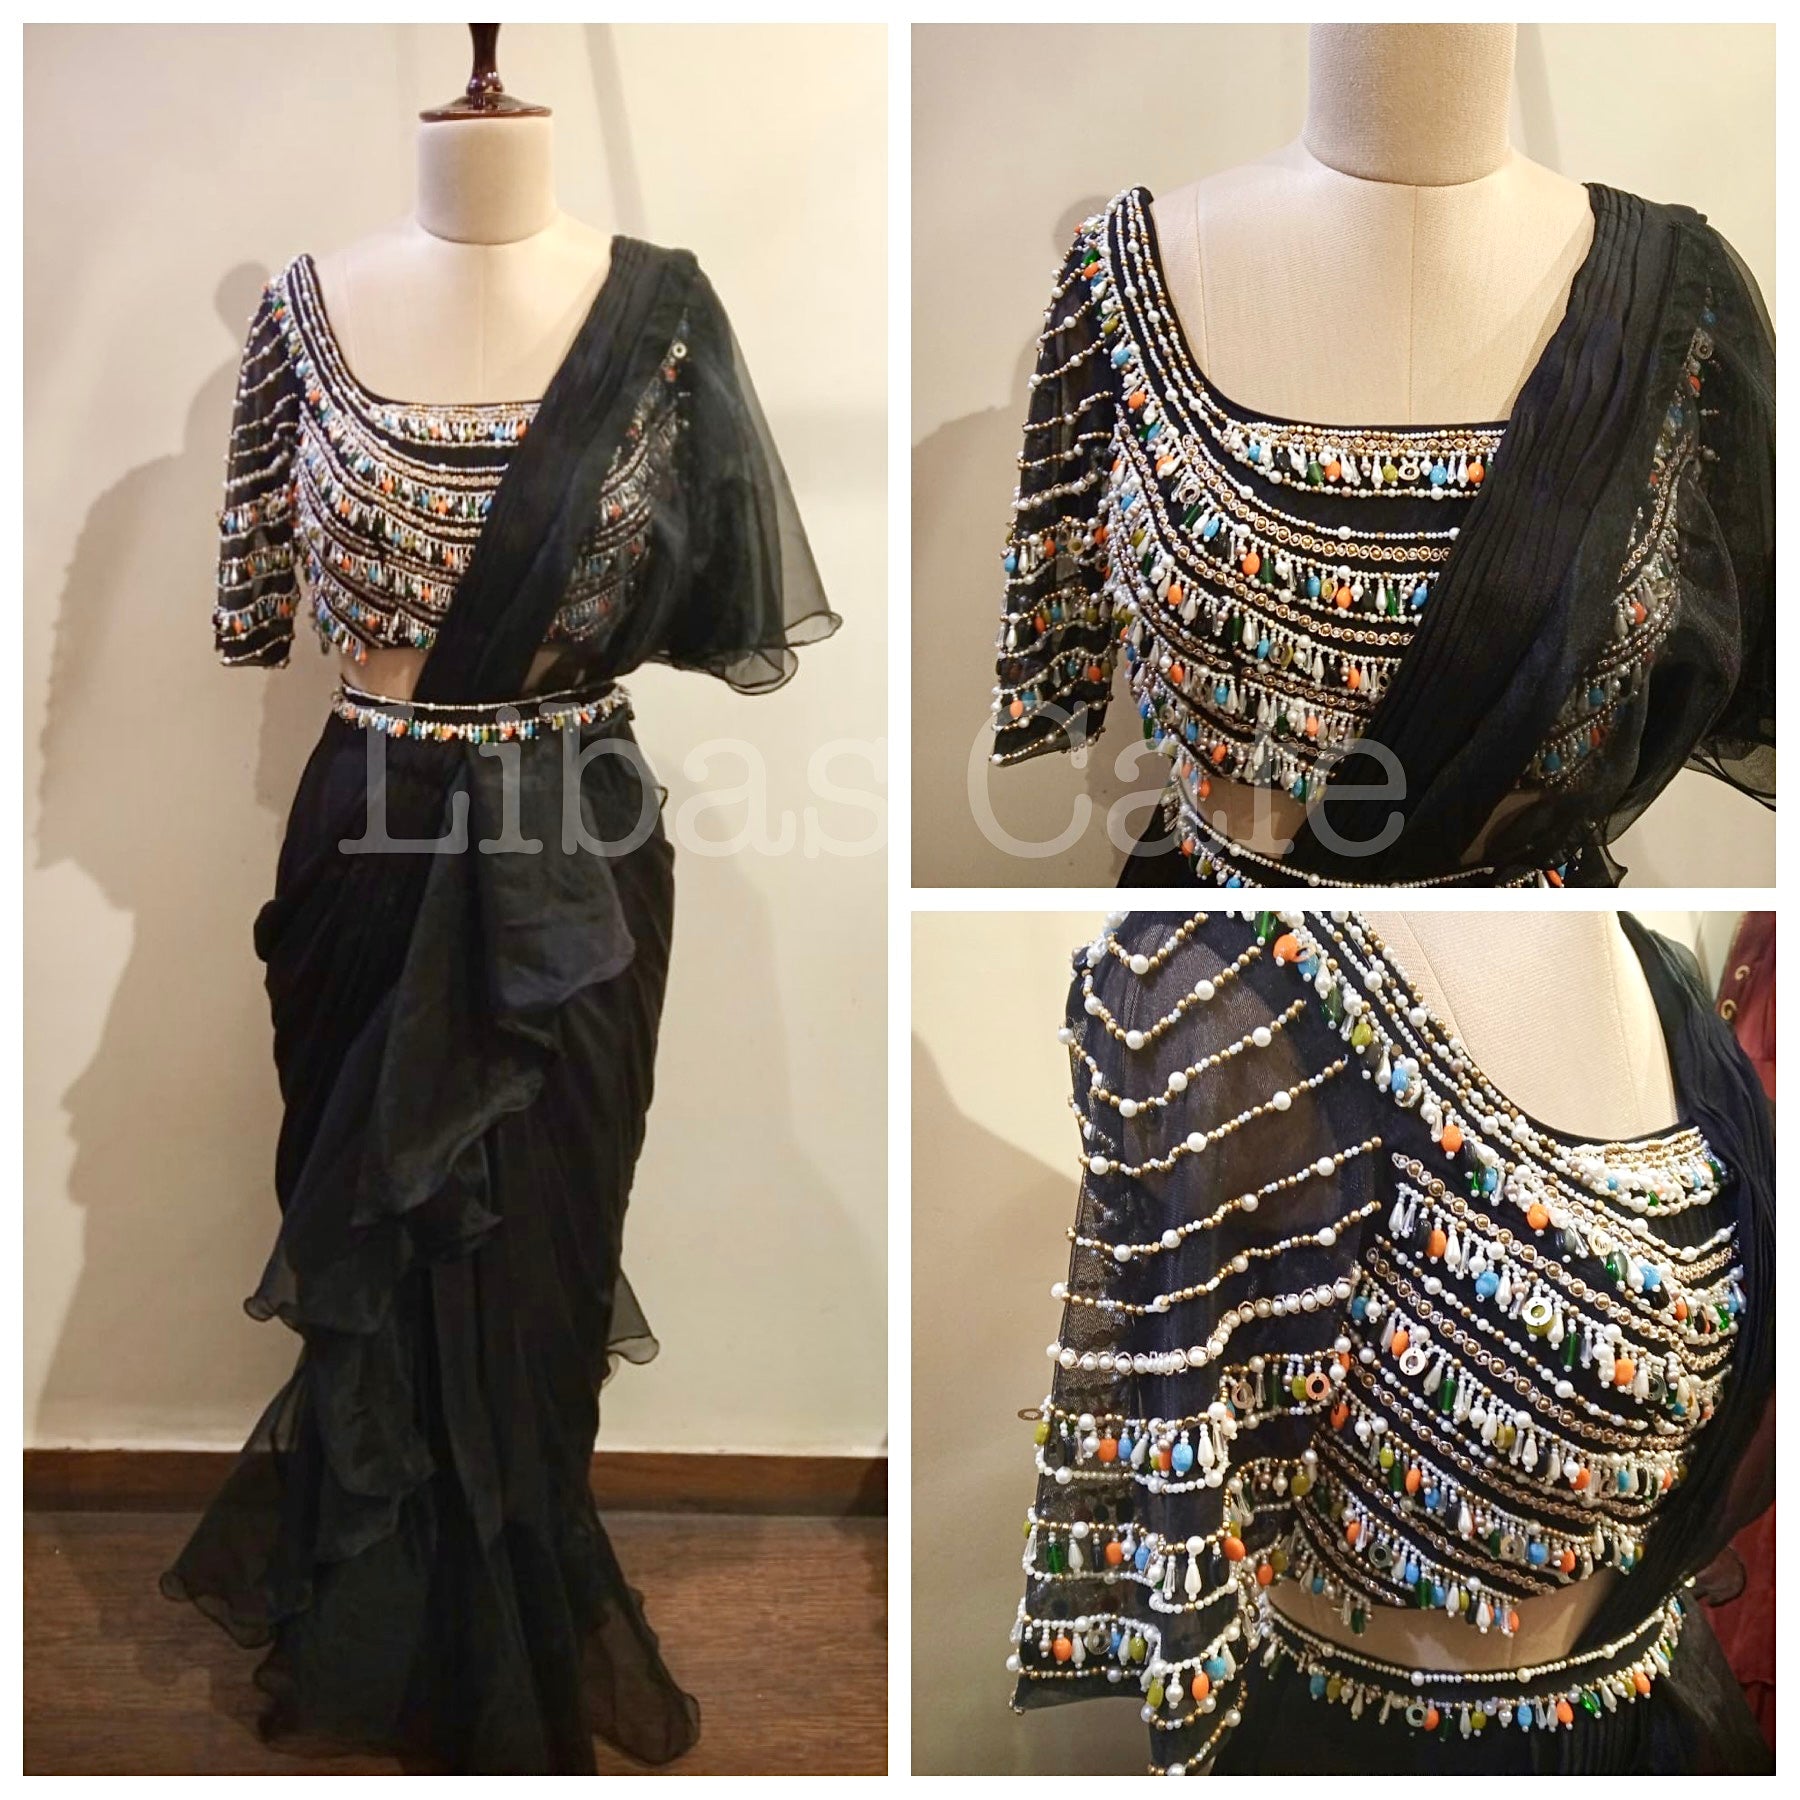 37 Hip belt ideas  saree with belt, embroidered blouse designs, blouse  designs silk